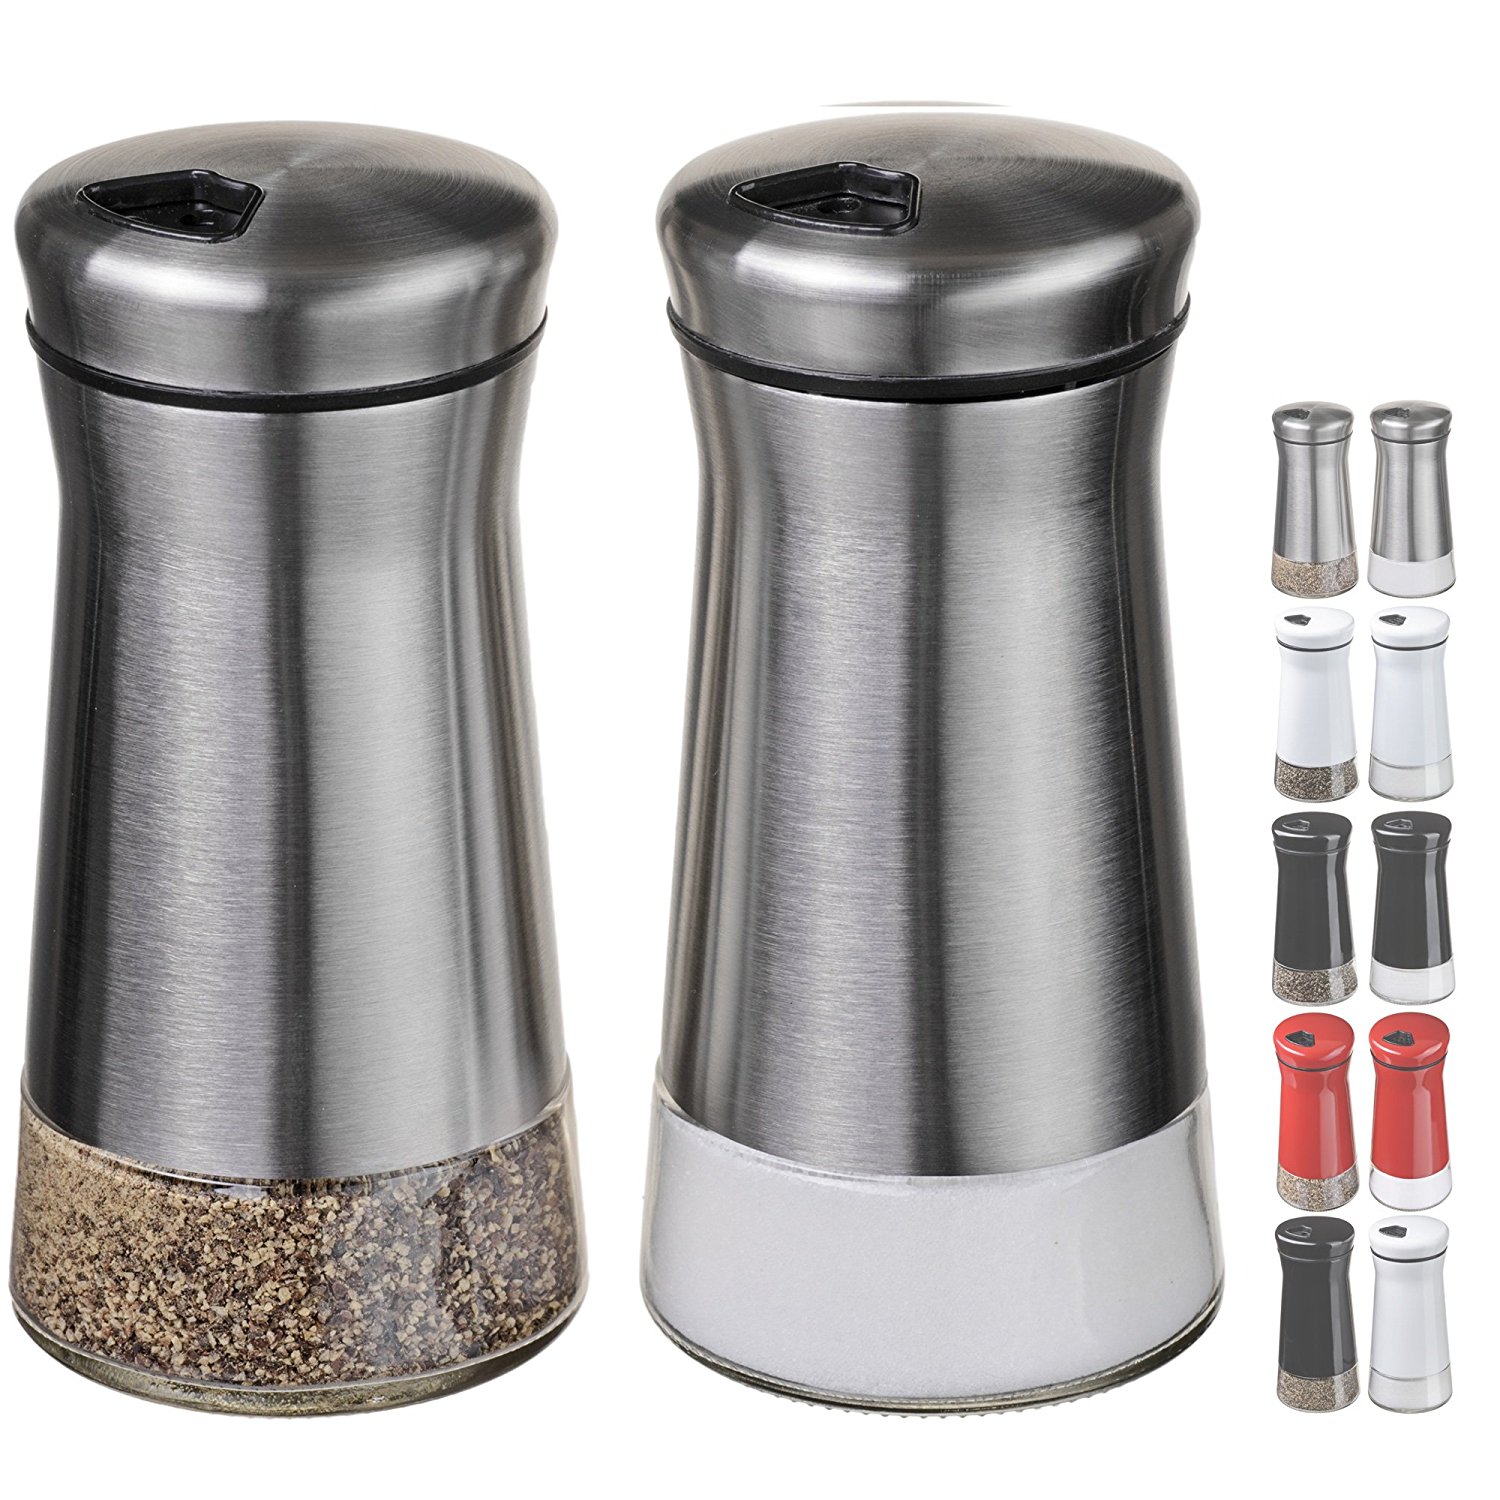 Amazon.com: CHEFVANTAGE Salt and Pepper Shakers Set with Adjustable ...